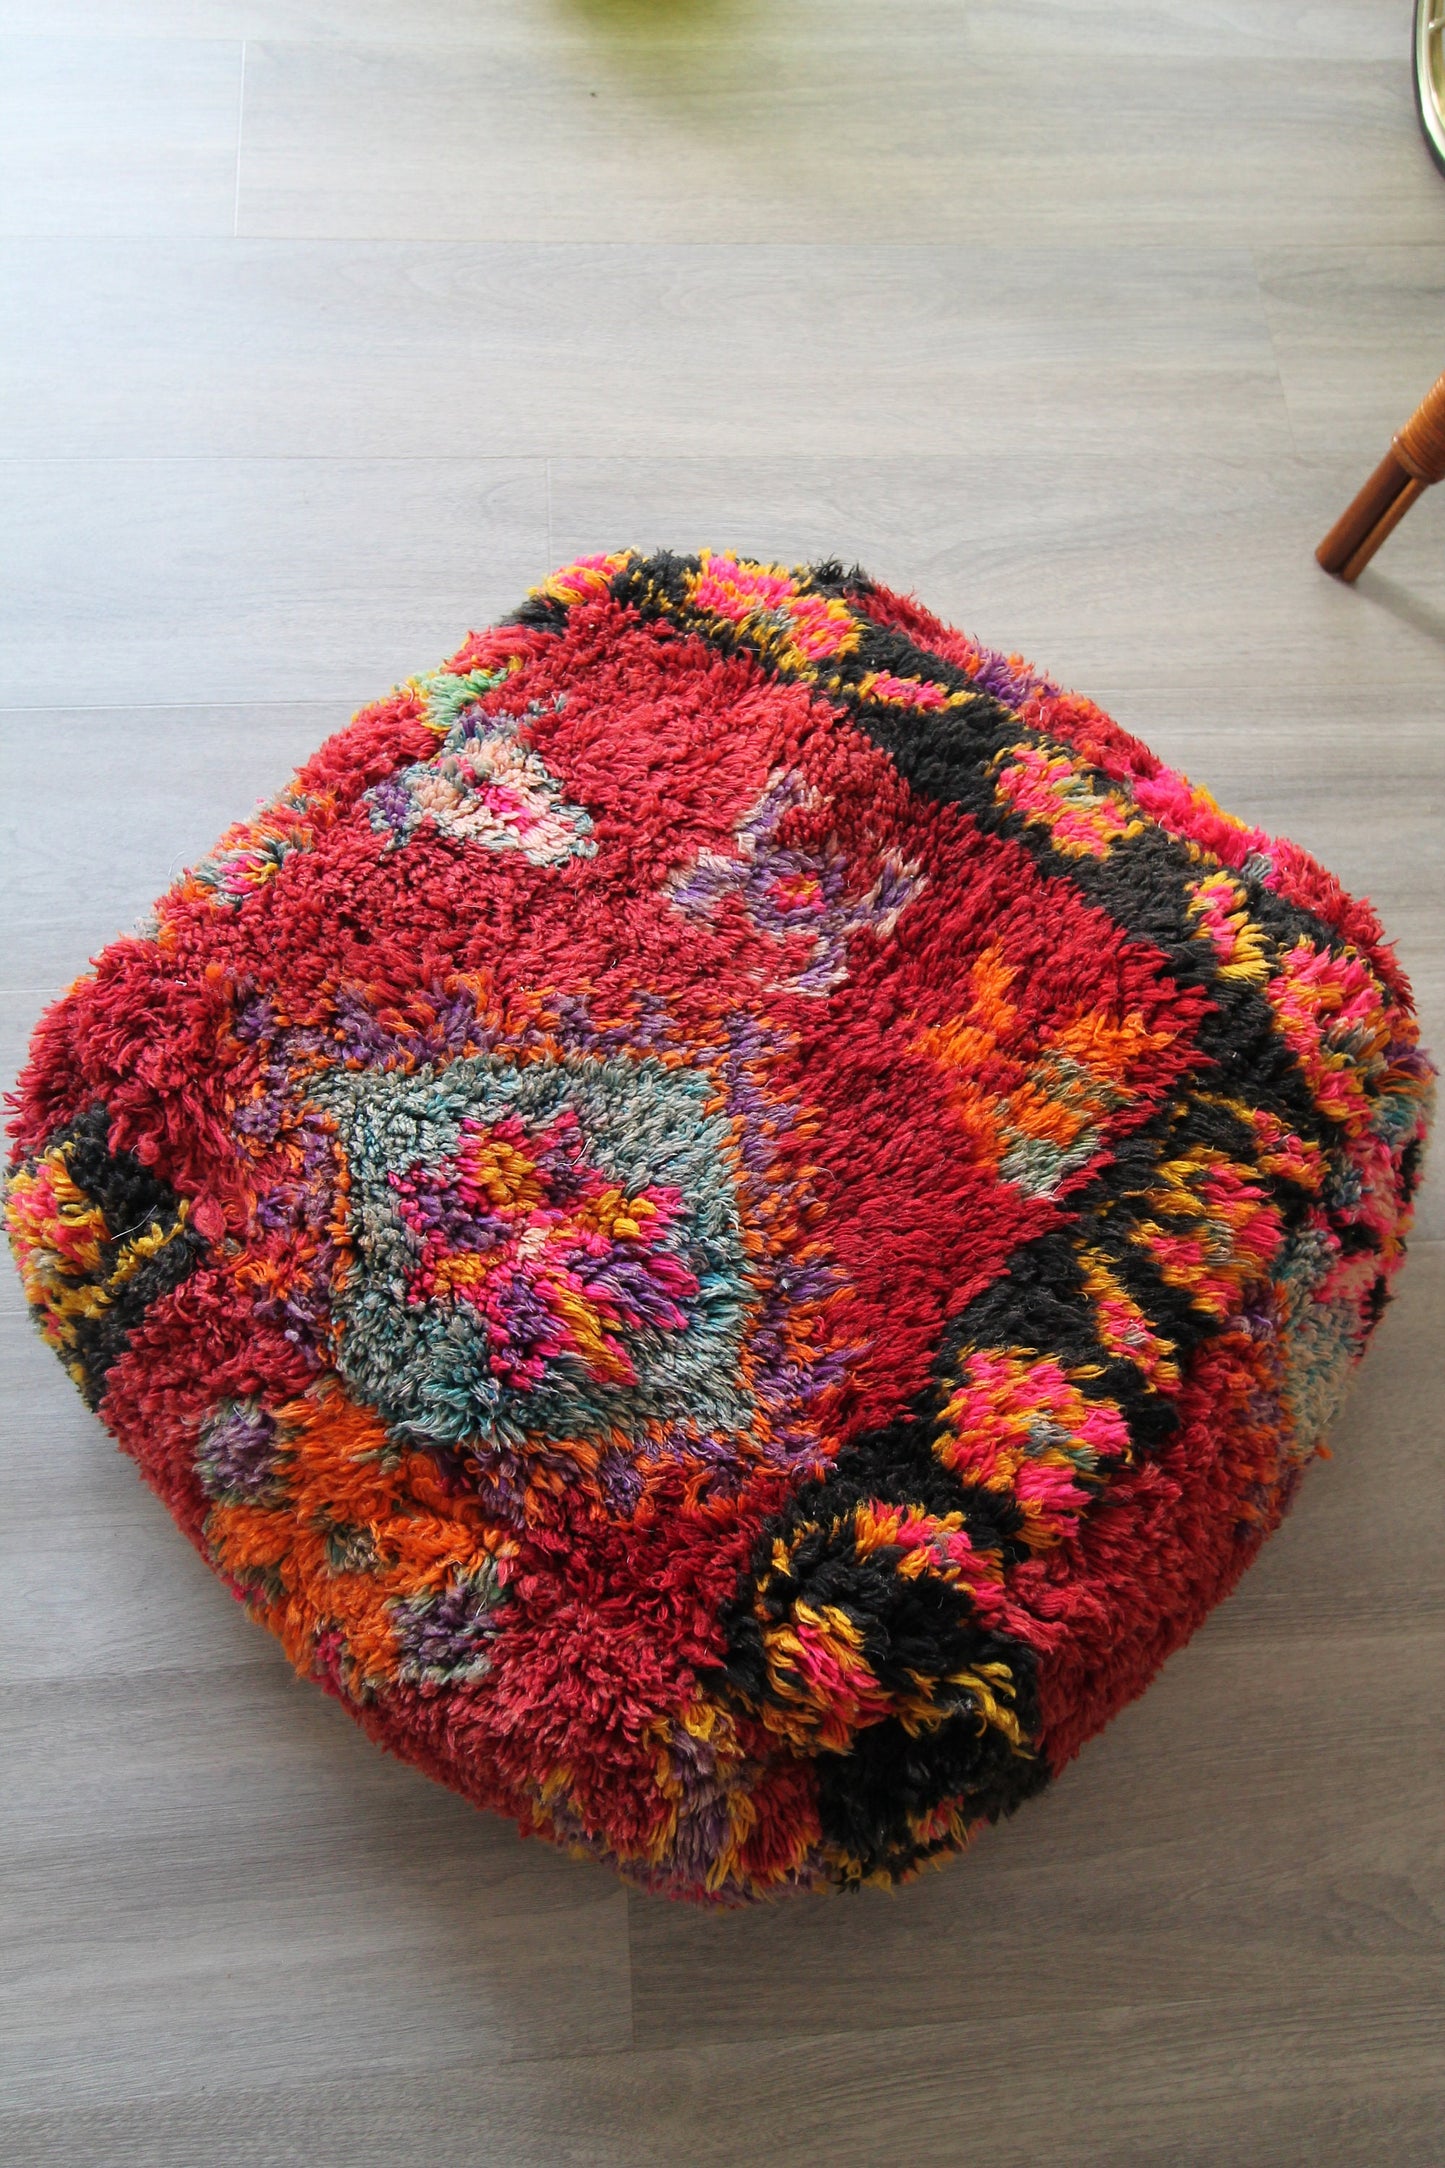 Red Wool Berber Pouf, Handmade Wool Stool/Pouf